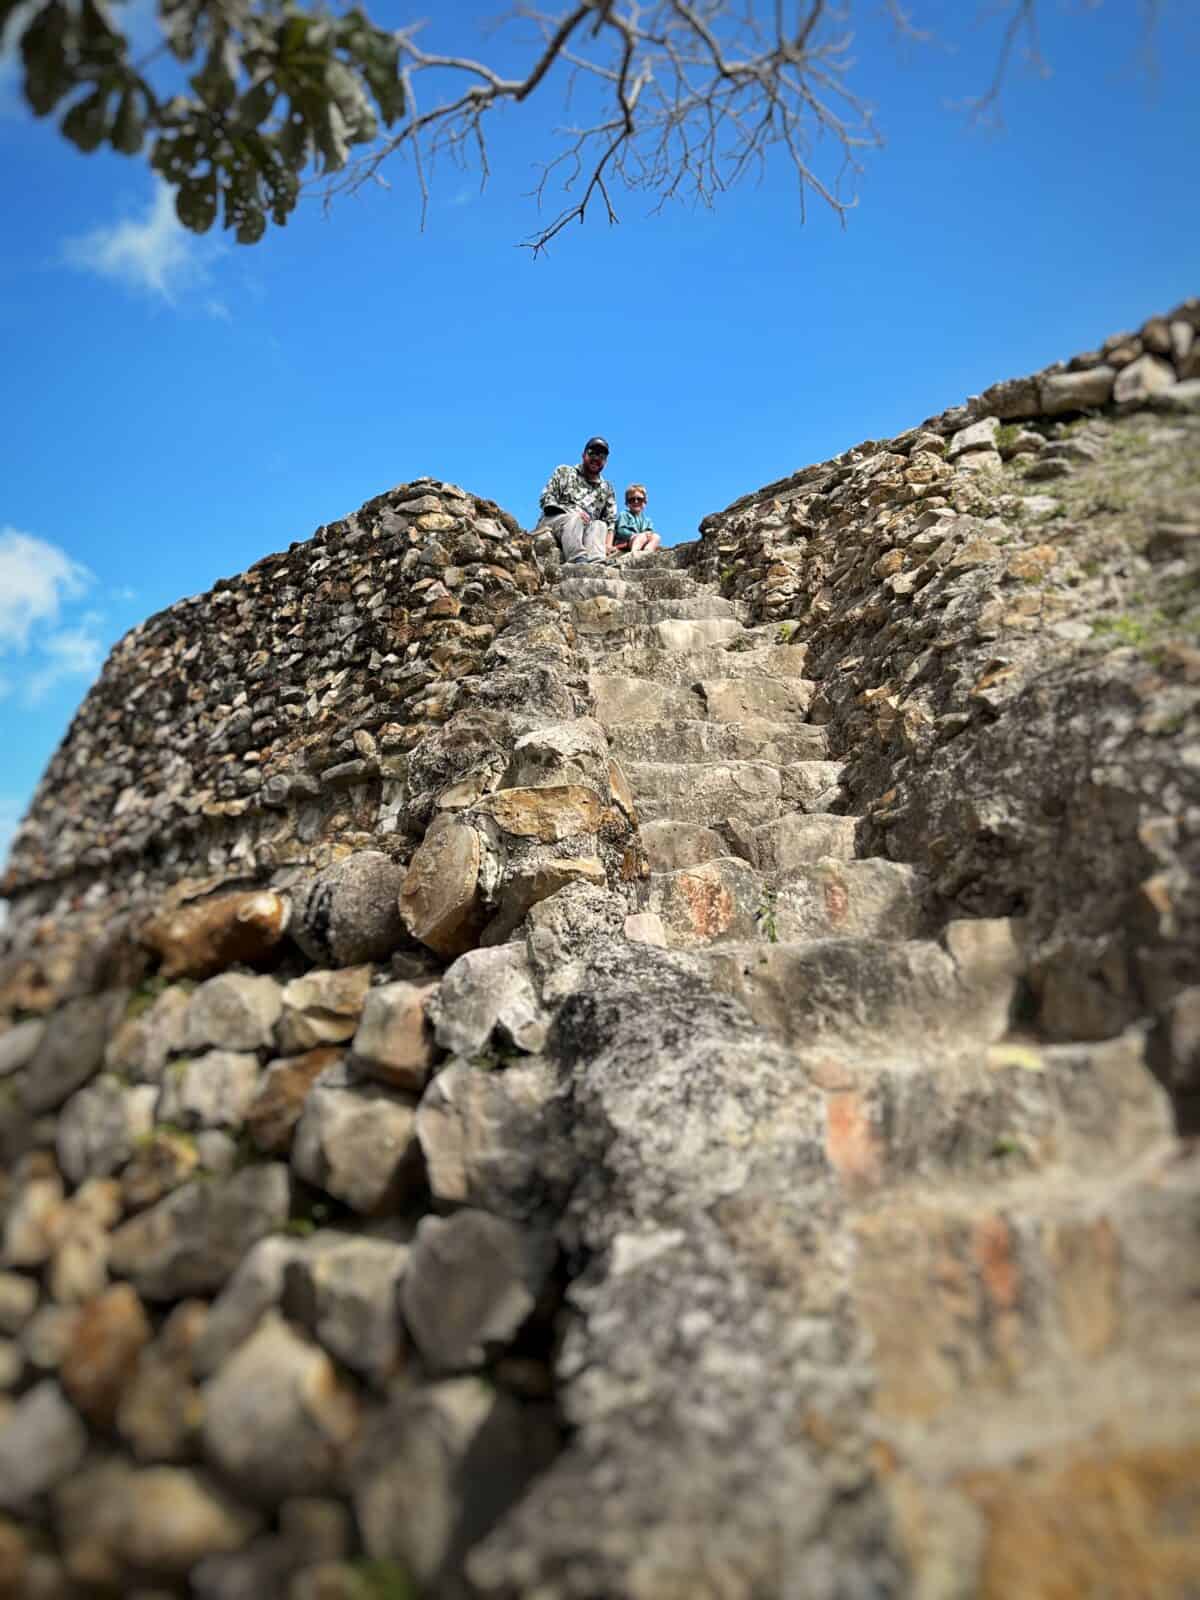 exploring the ancient Mayan ruins Altun Ha with kids